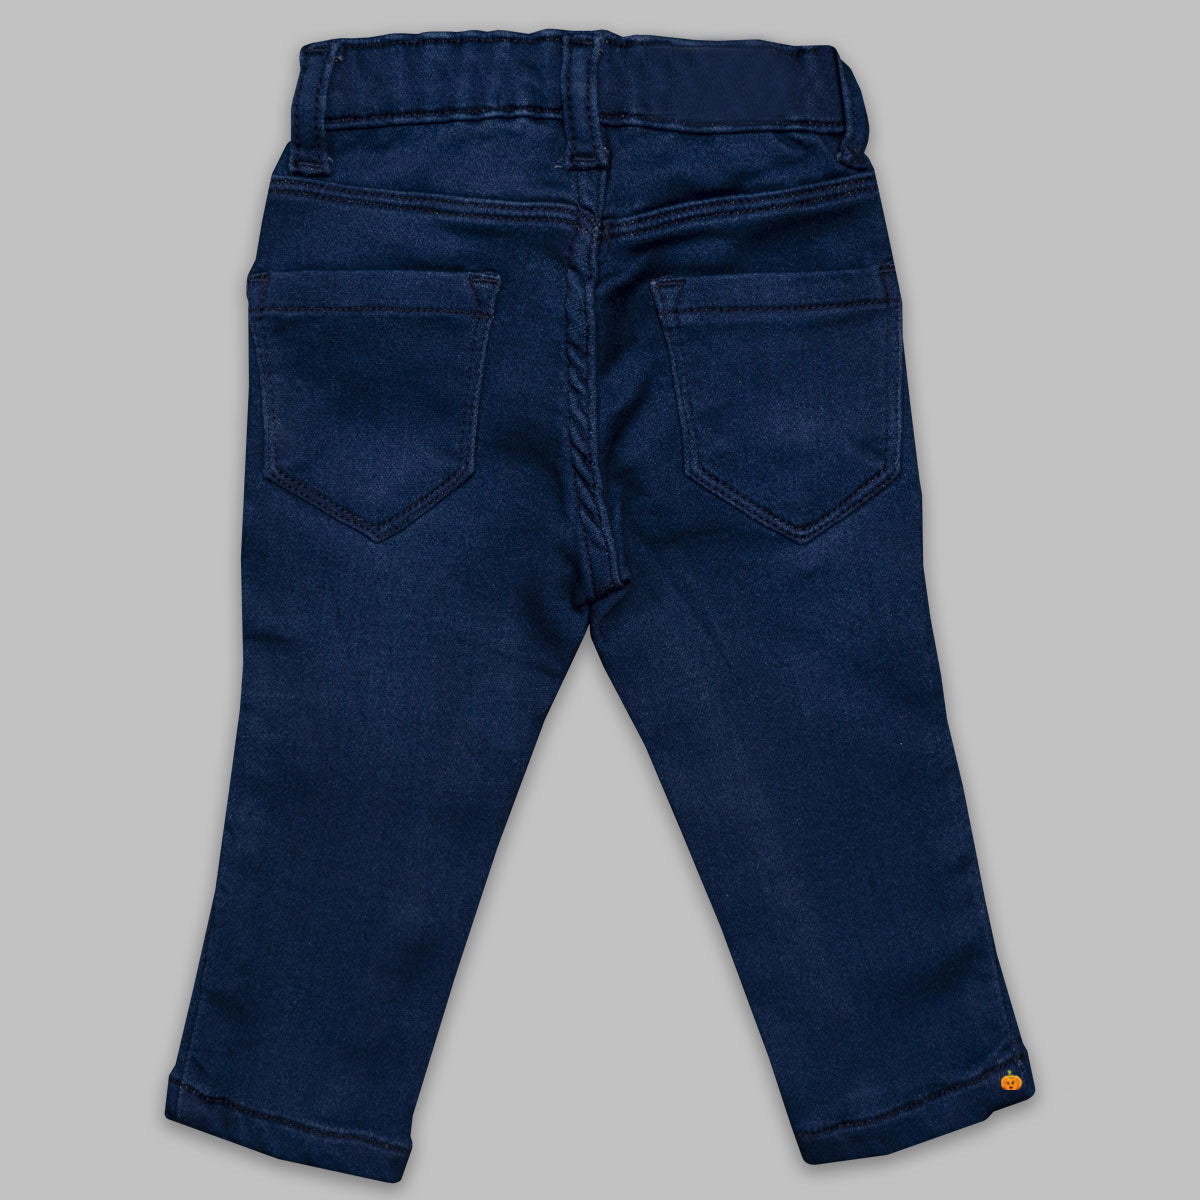 Latest Stylish Jeans Pants For Kids 2021-2022/ Boys Jeans Design Ideas -  YouTube | Stylish jeans, Jeans outfit men, Kids jeans boys